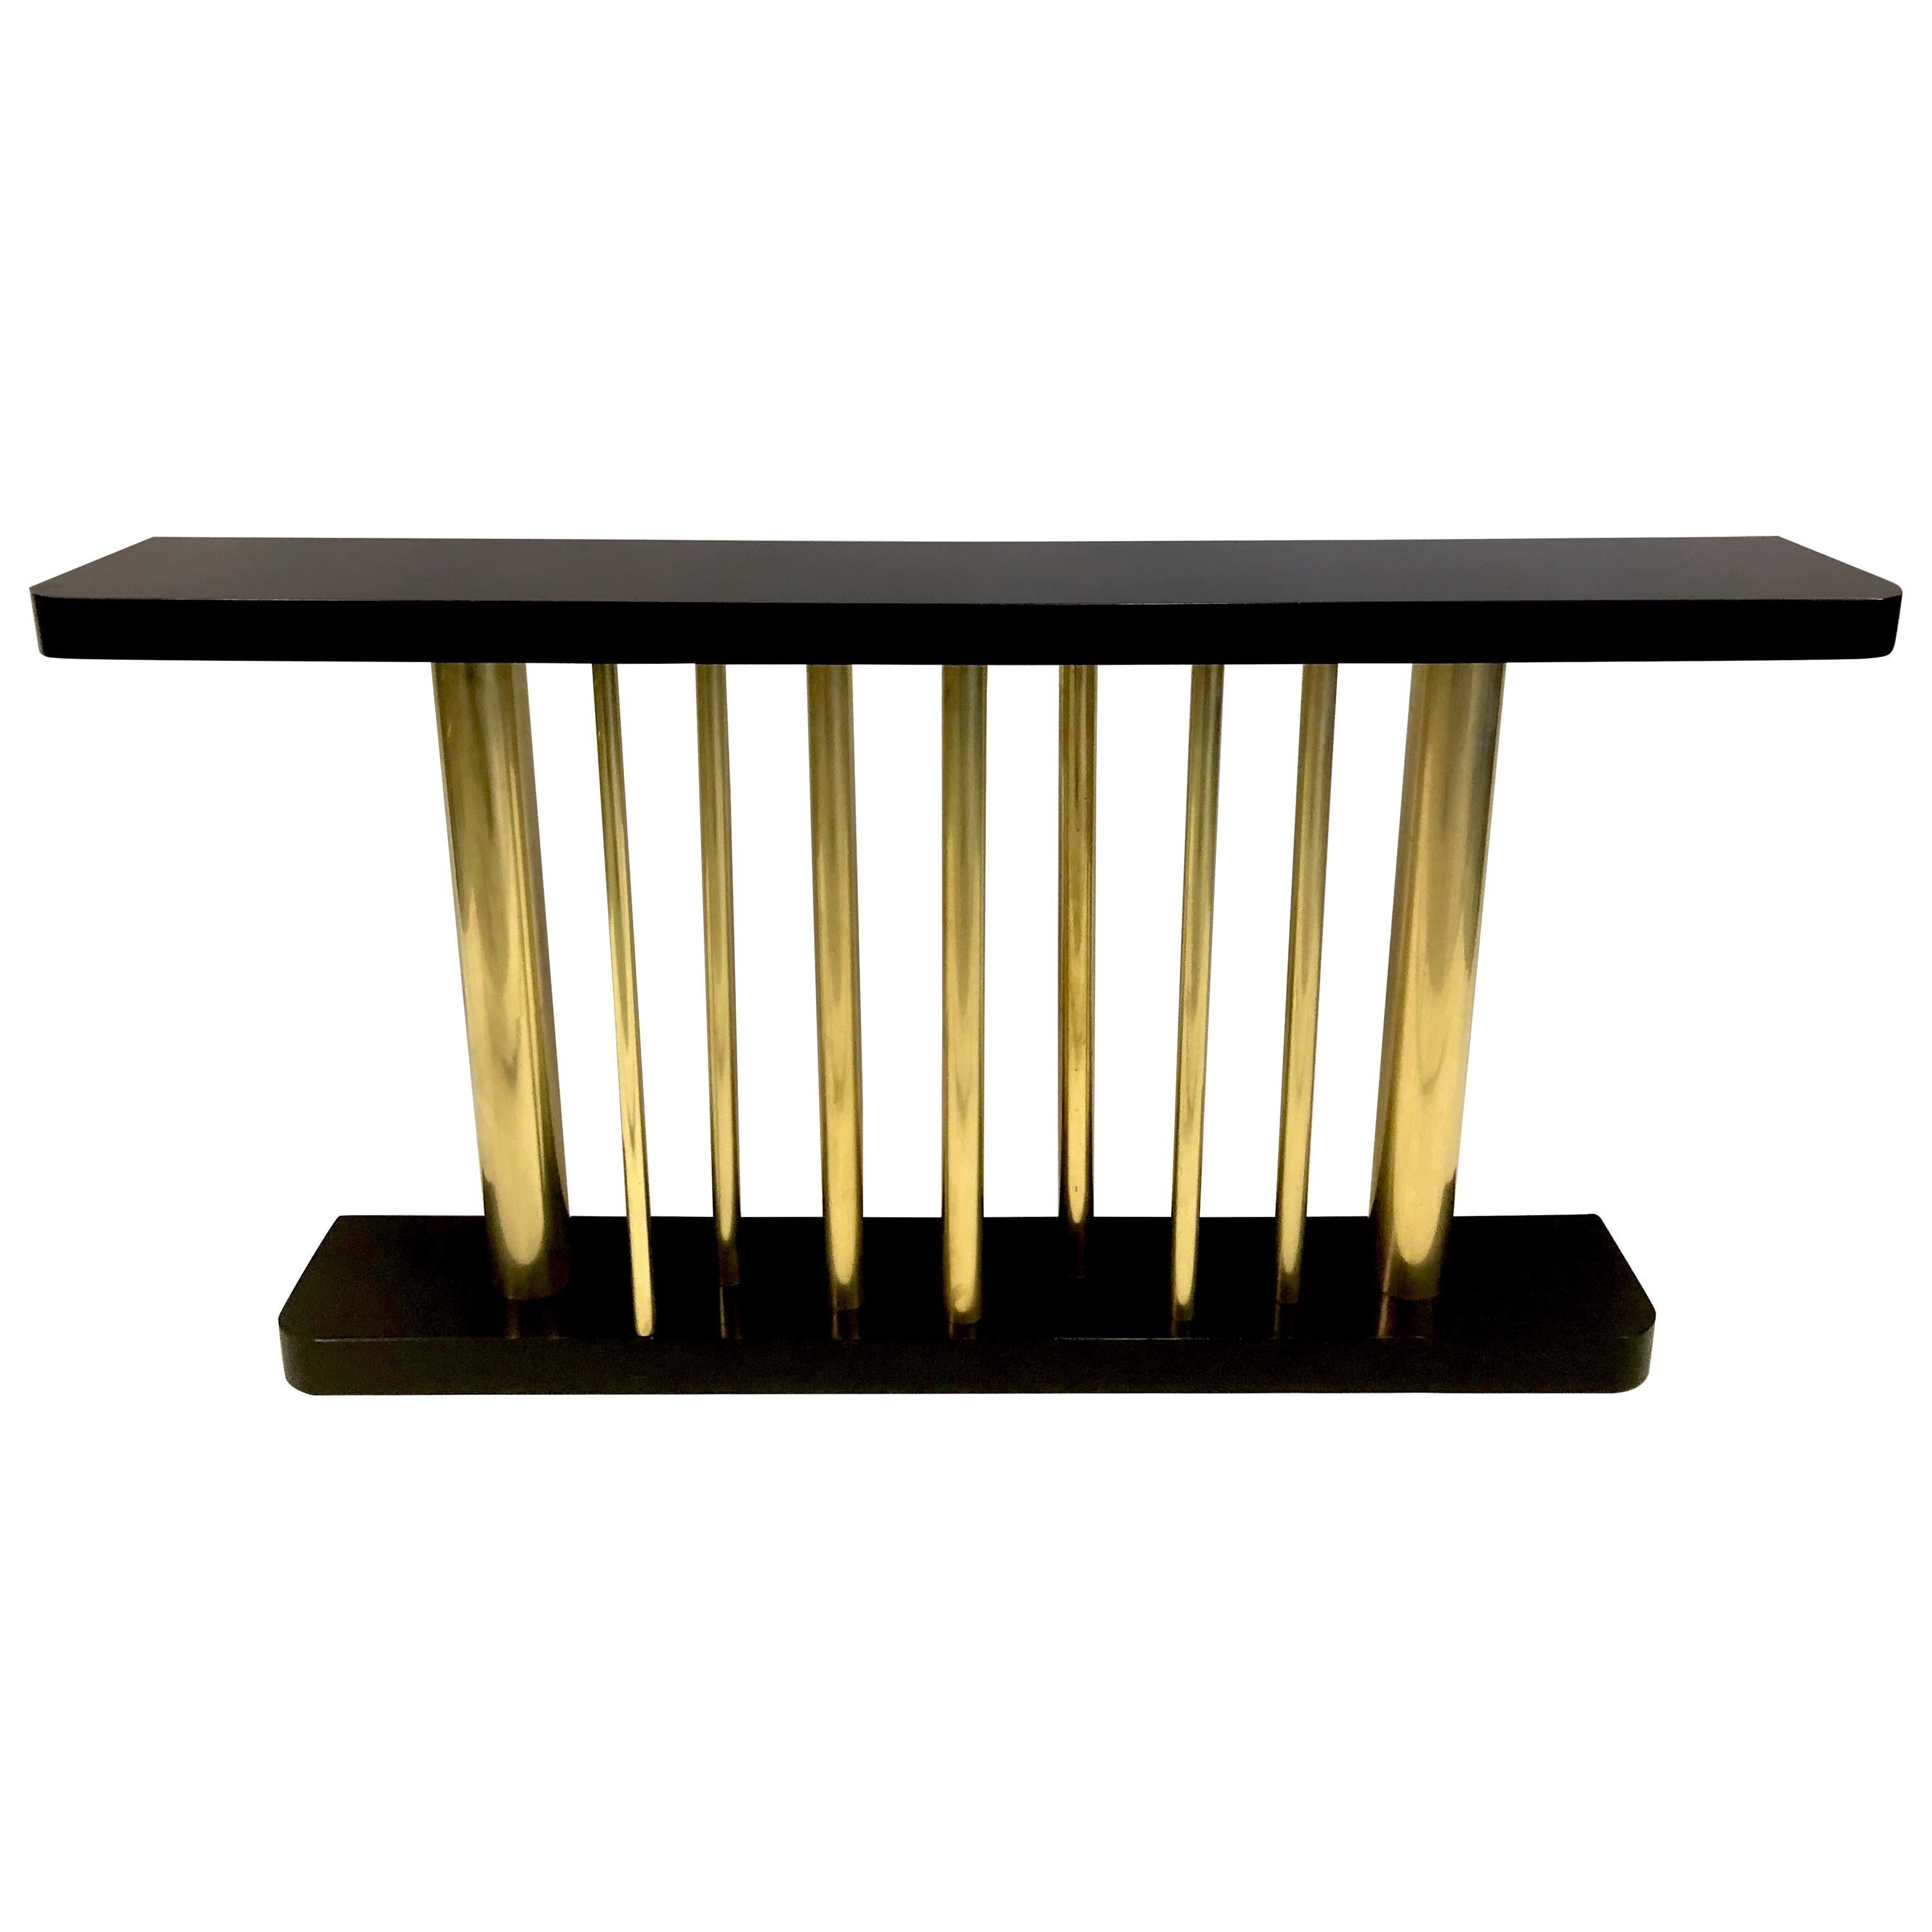 Italian Midcentury Modern Wood & Brass Console / Sofa Table,  Franco Albini